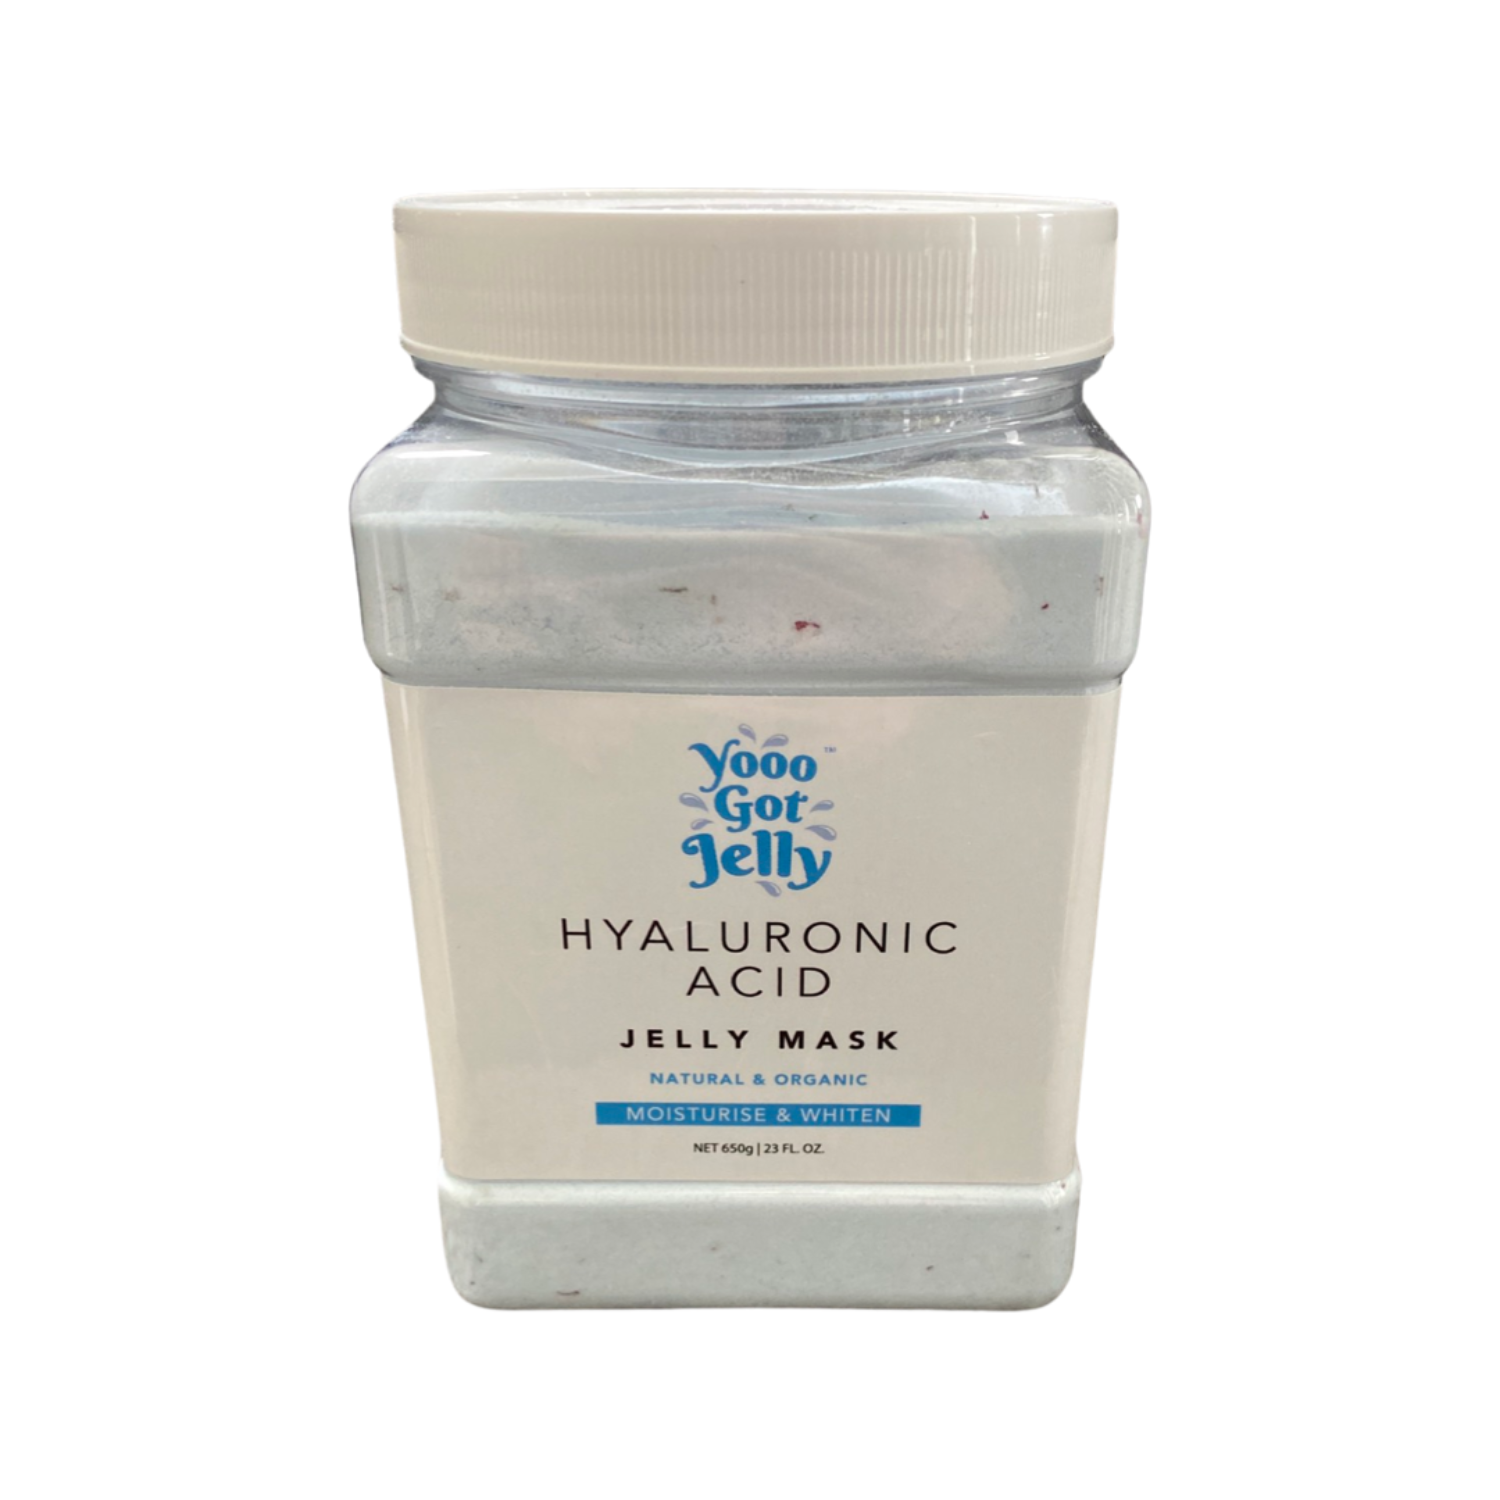 HYALURONIC ACID JELLY MASK - Hydrating